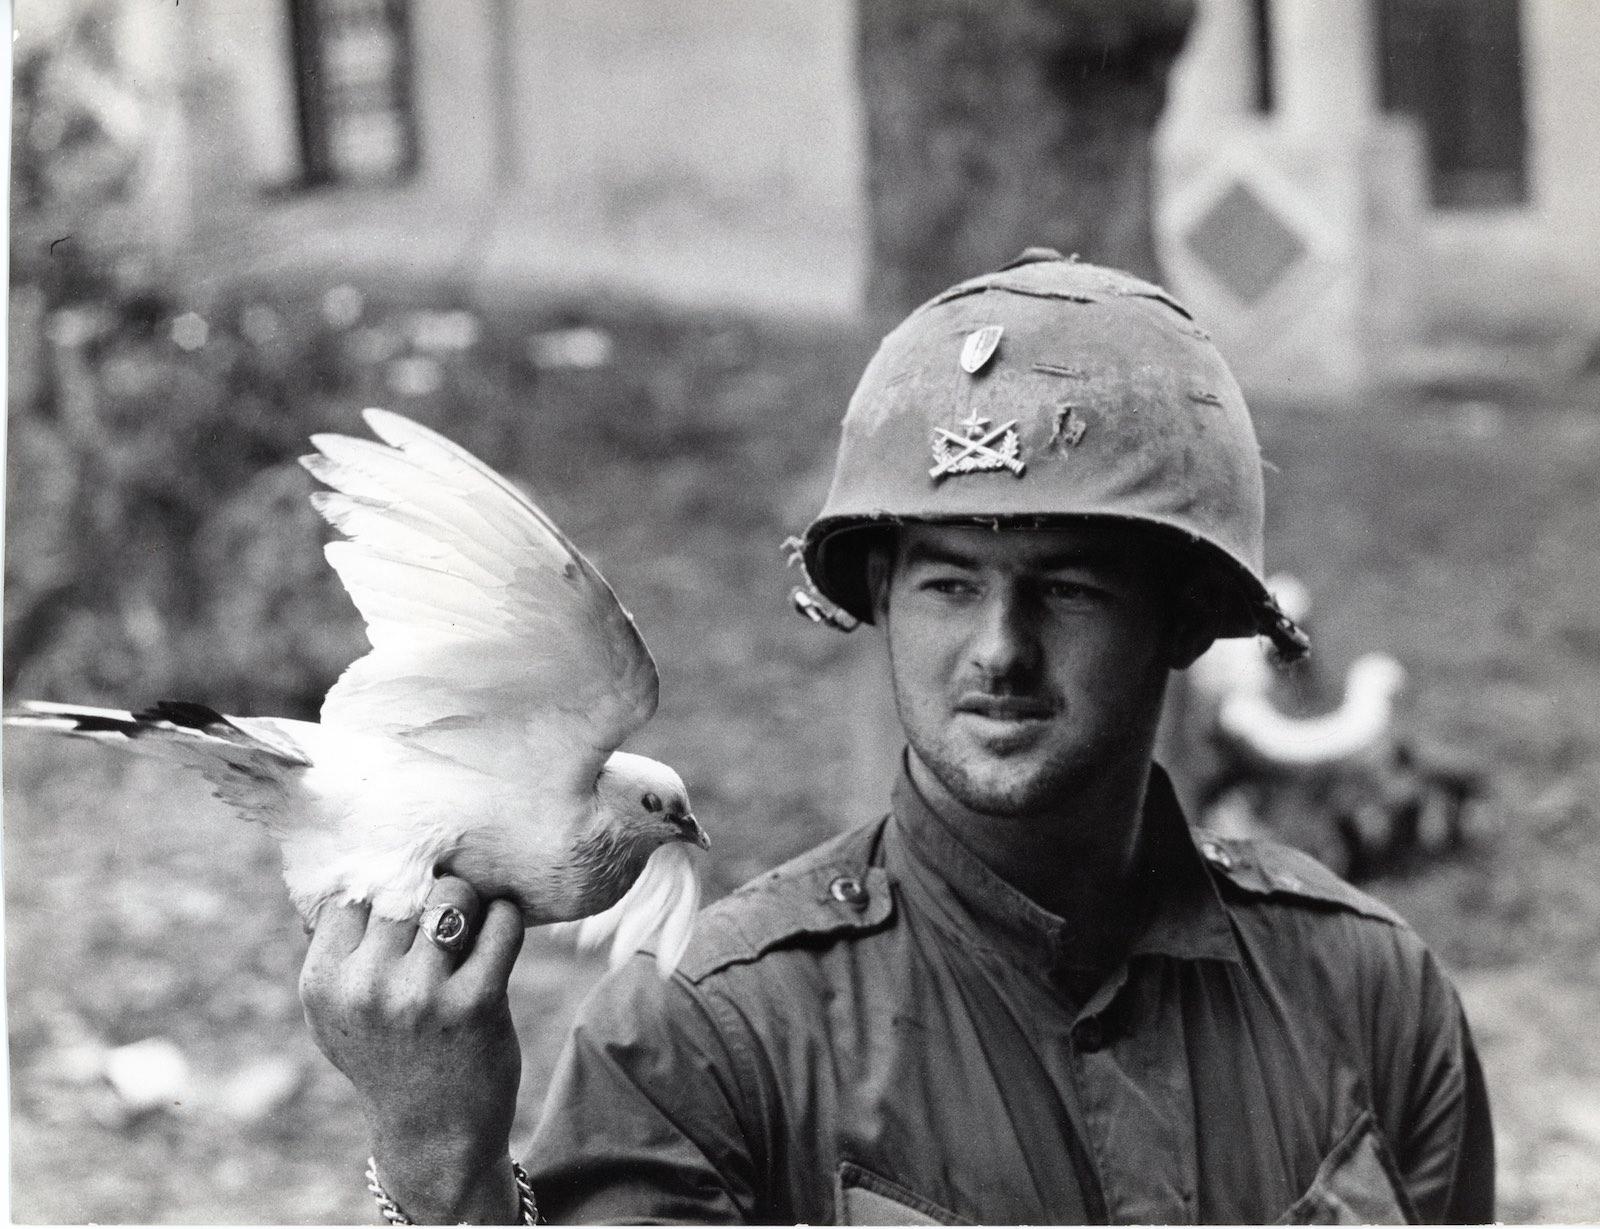 Christian Simonpietri, Marine and Dove, Hue, 1968. DOGMA BATTLEFIELD LENS COLLECTION.